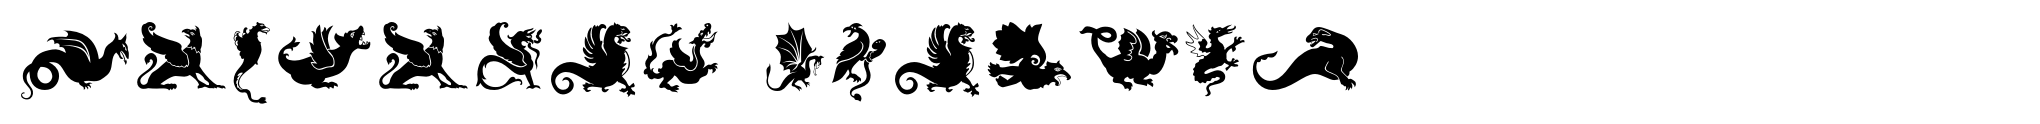 Medieval Dragons image